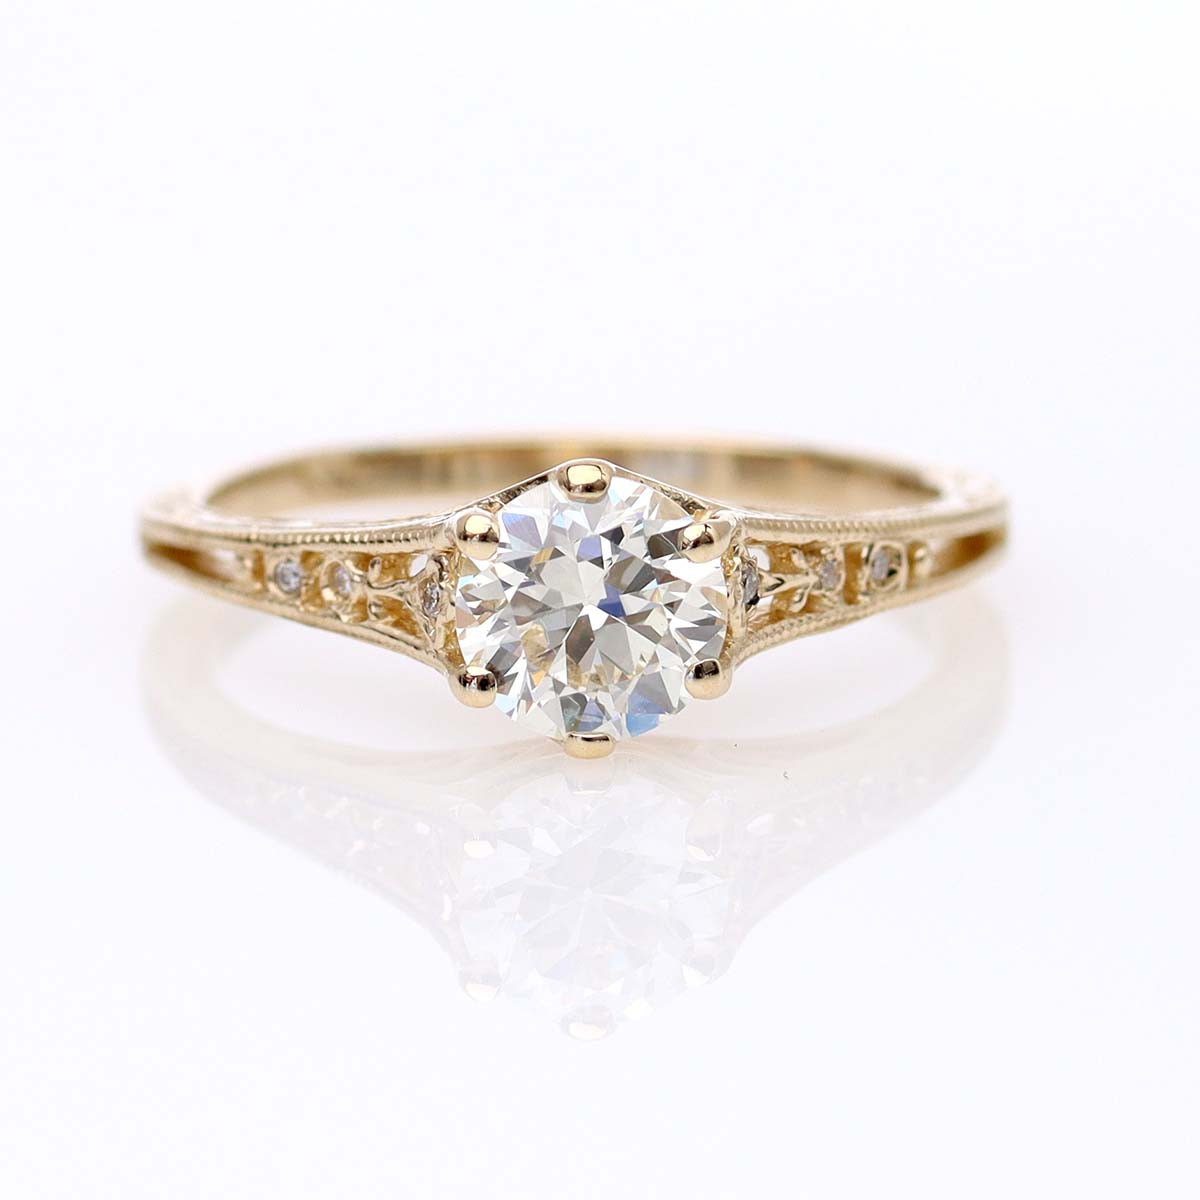 Enchanting Edwardian Revival Engagement Ring #3330-10 Default Title